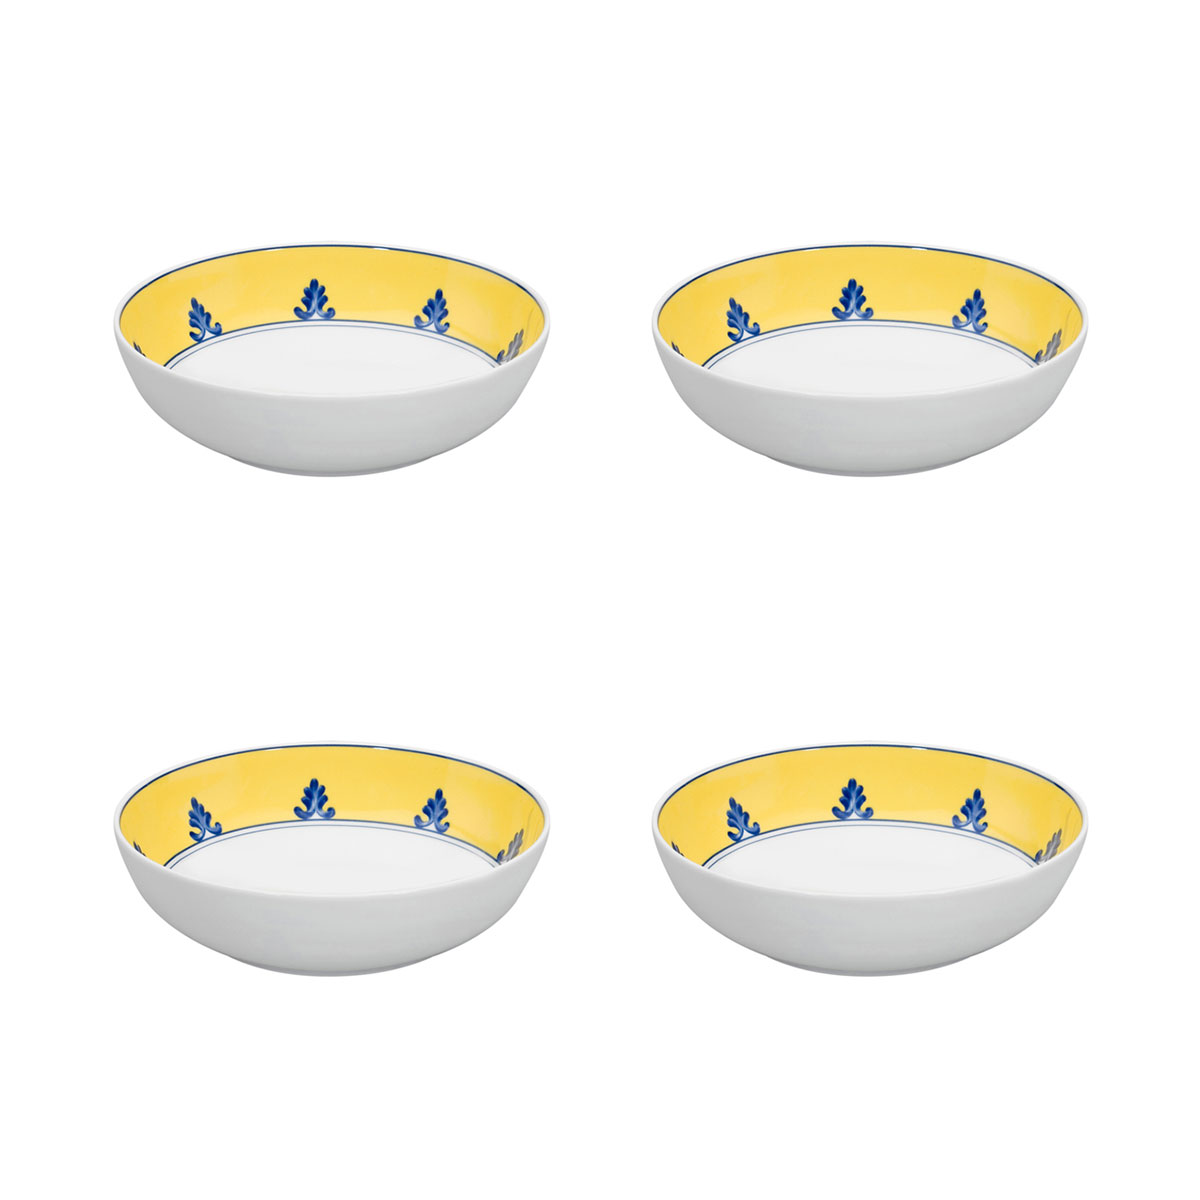 Vista Alegre Porcelain Castelo Branco Cereal Bowl, Set of 4